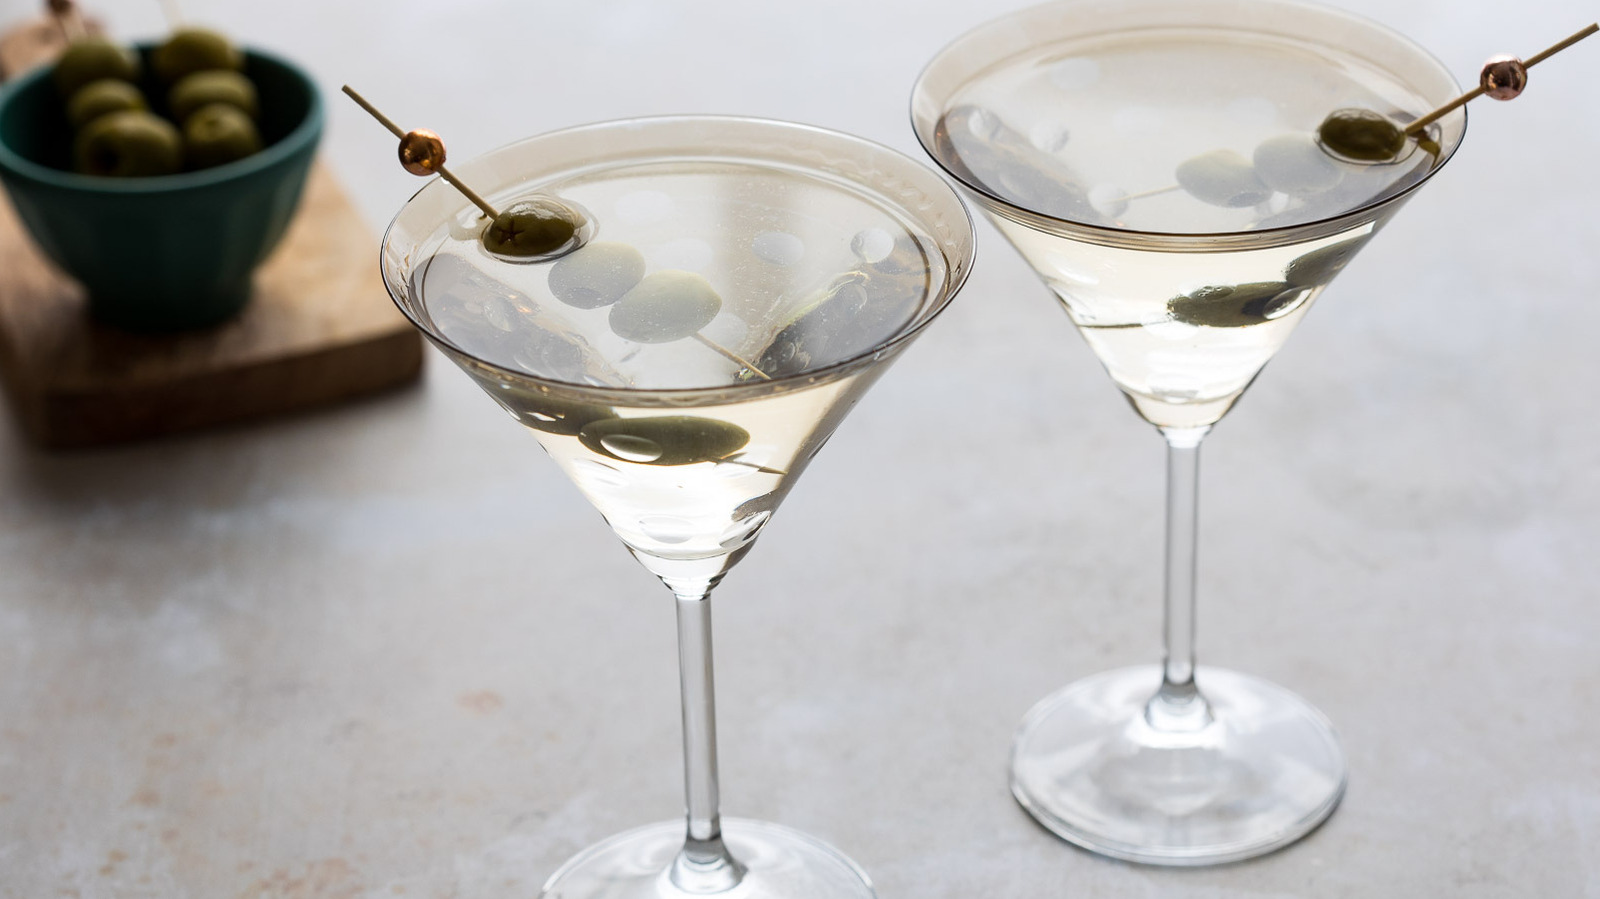 https://www.tastingtable.com/img/gallery/easy-dirty-martini-recipe/l-intro-1655155061.jpg